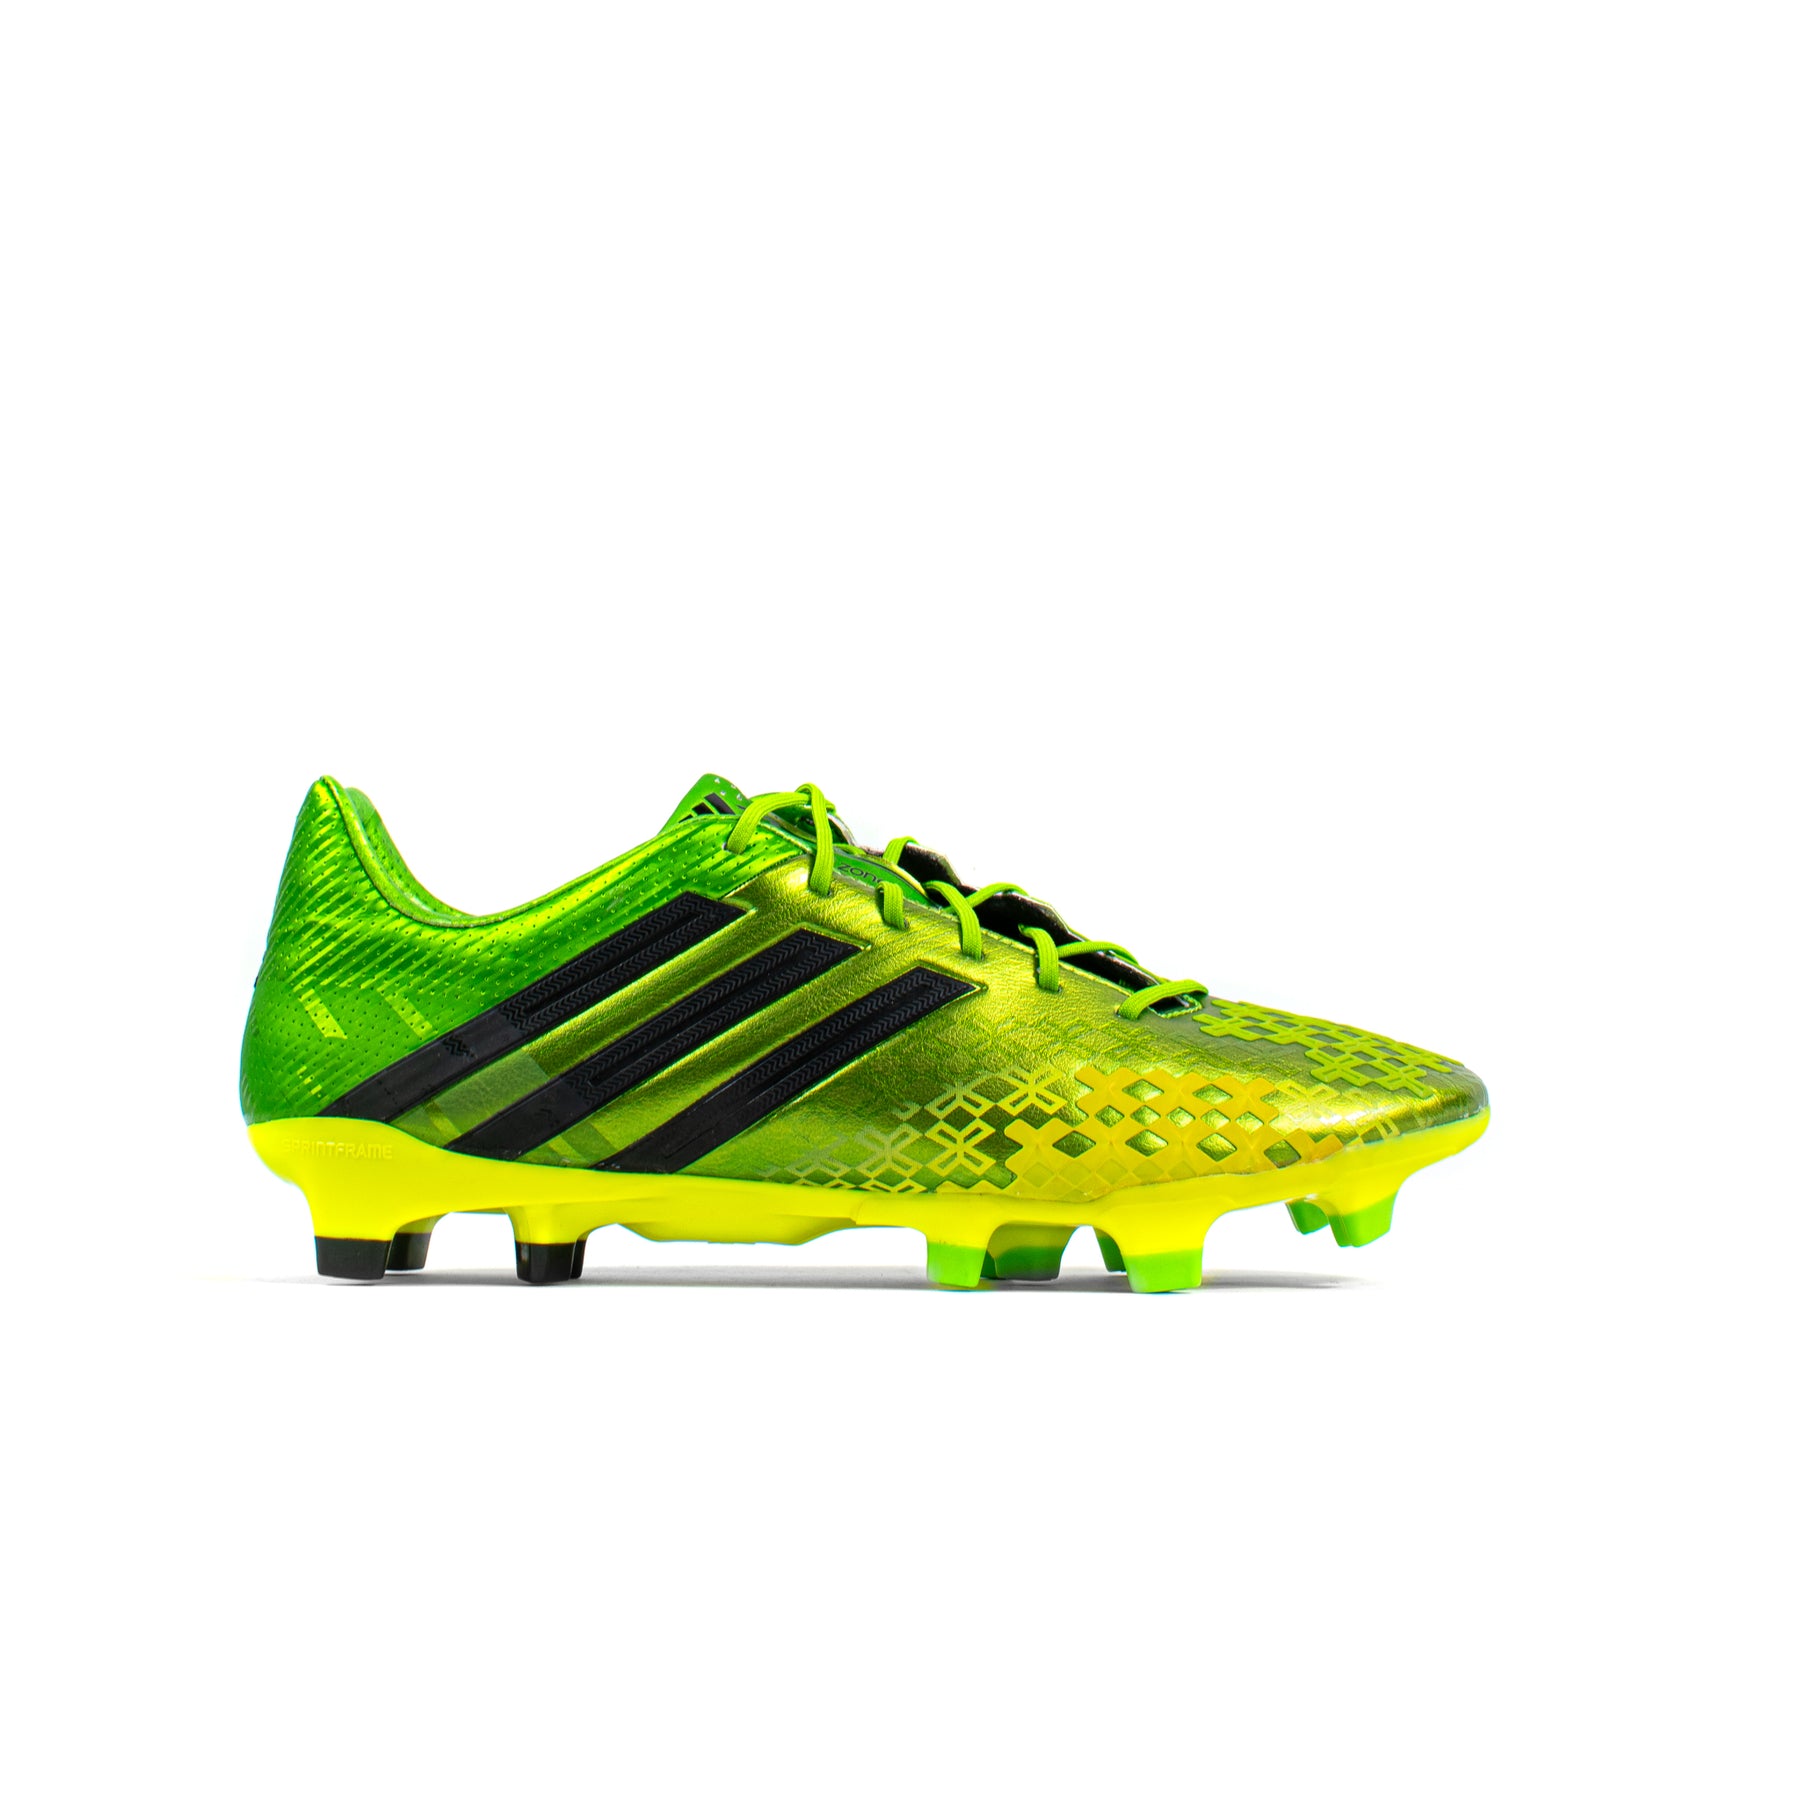 Adidas Predator Lz Lethal Zone Ii Green Fg – Classic Soccer Cleats